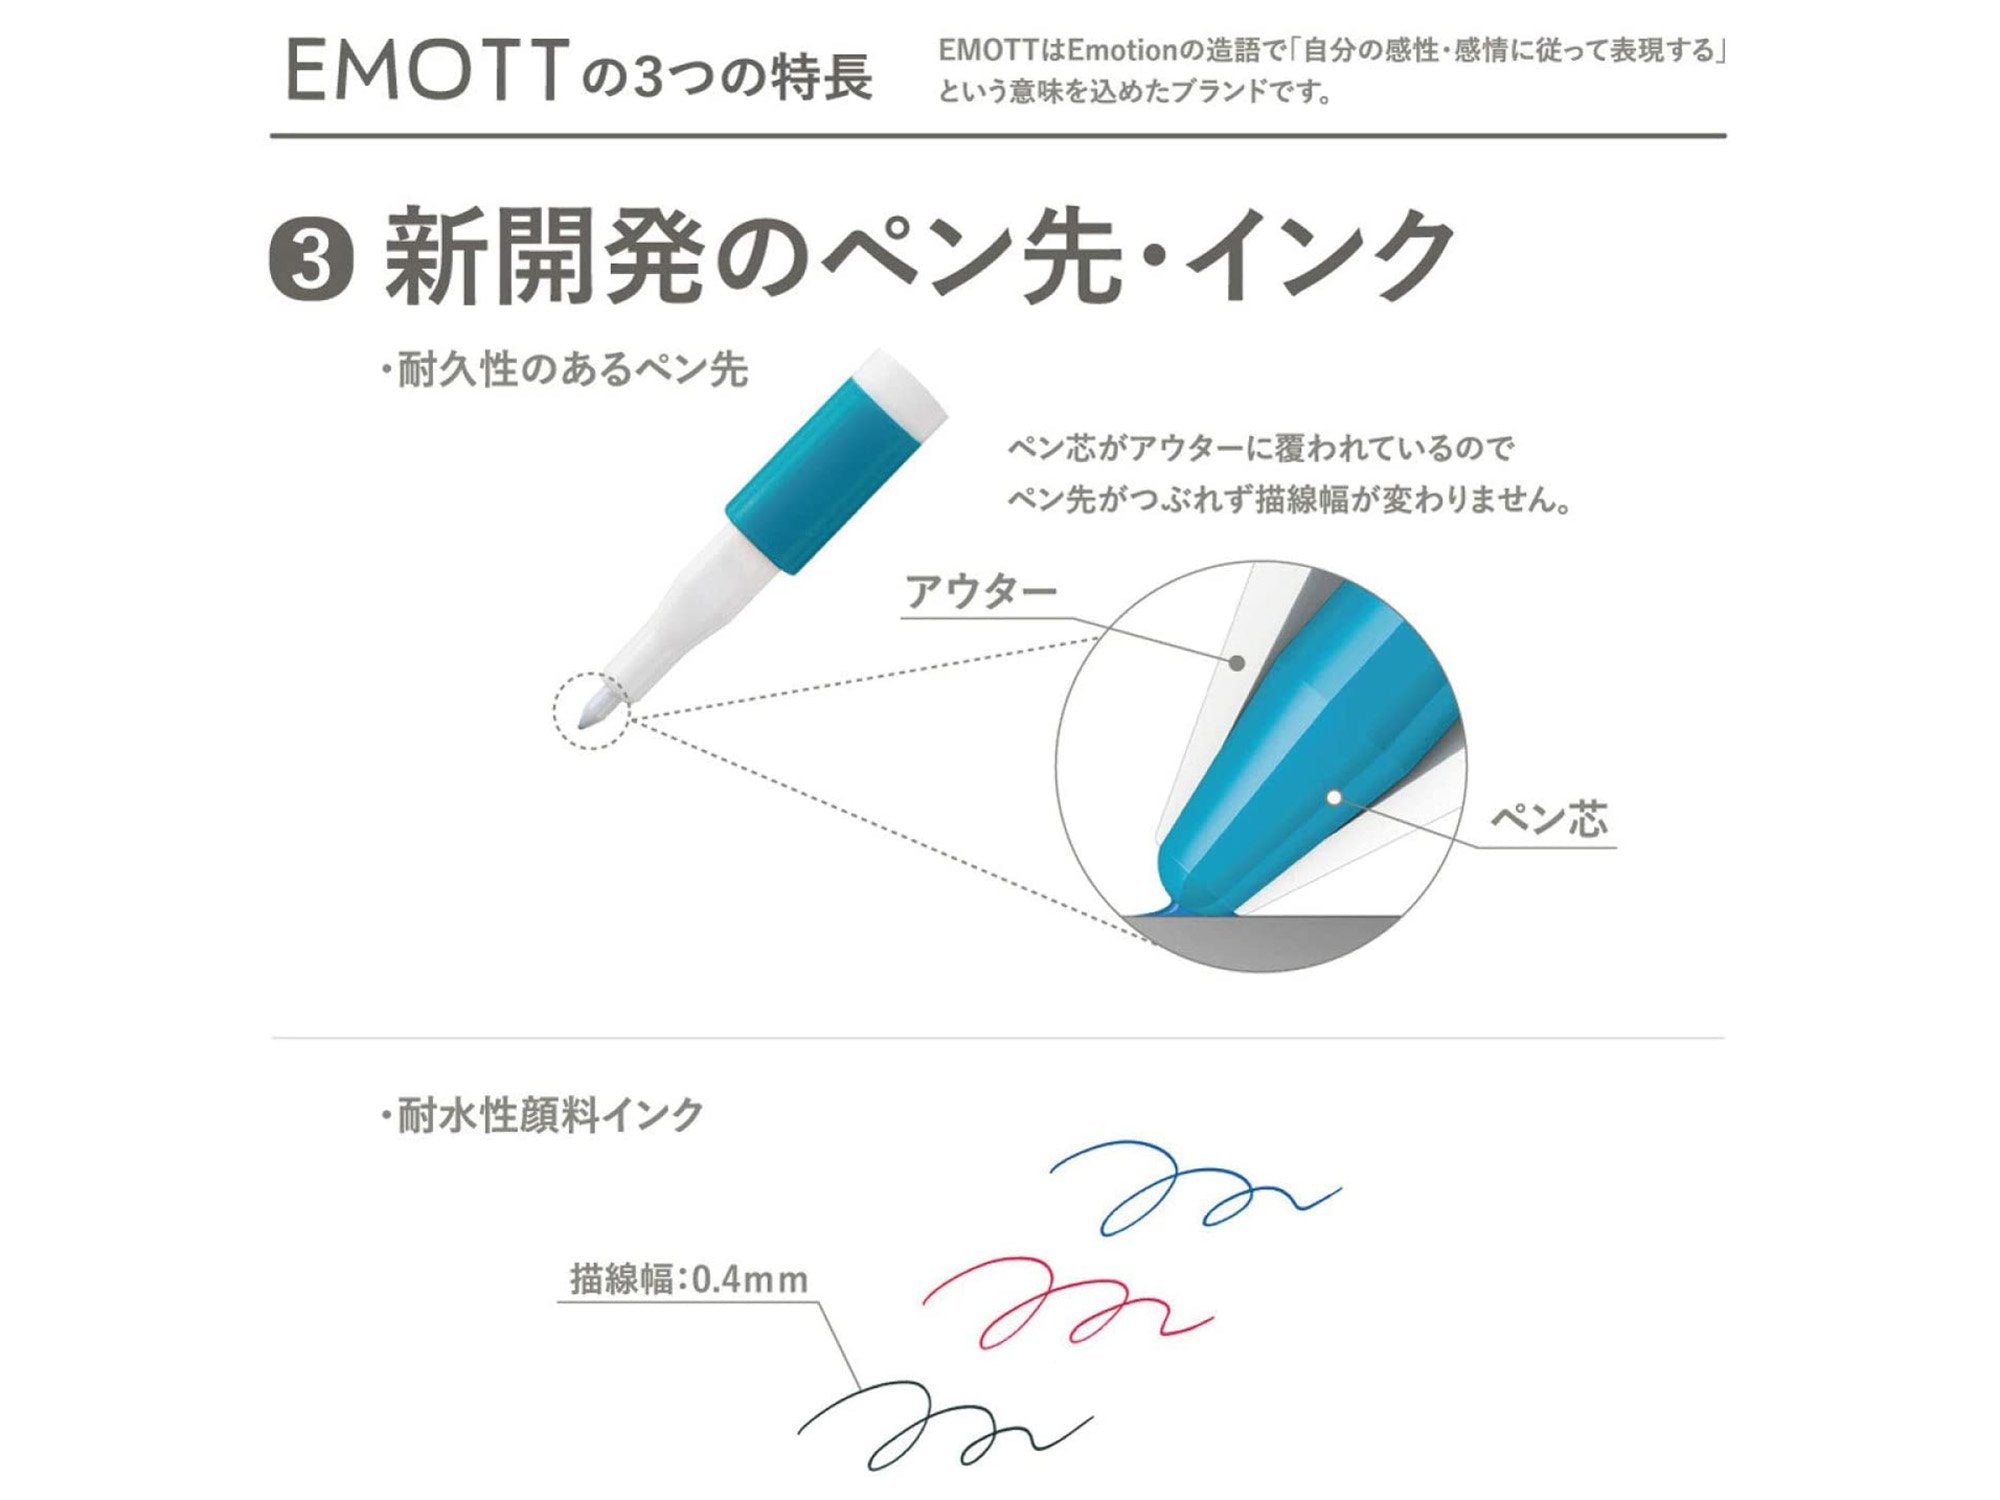 EMOTT 0.4mm Fineliner Pen Set of 5 - #2